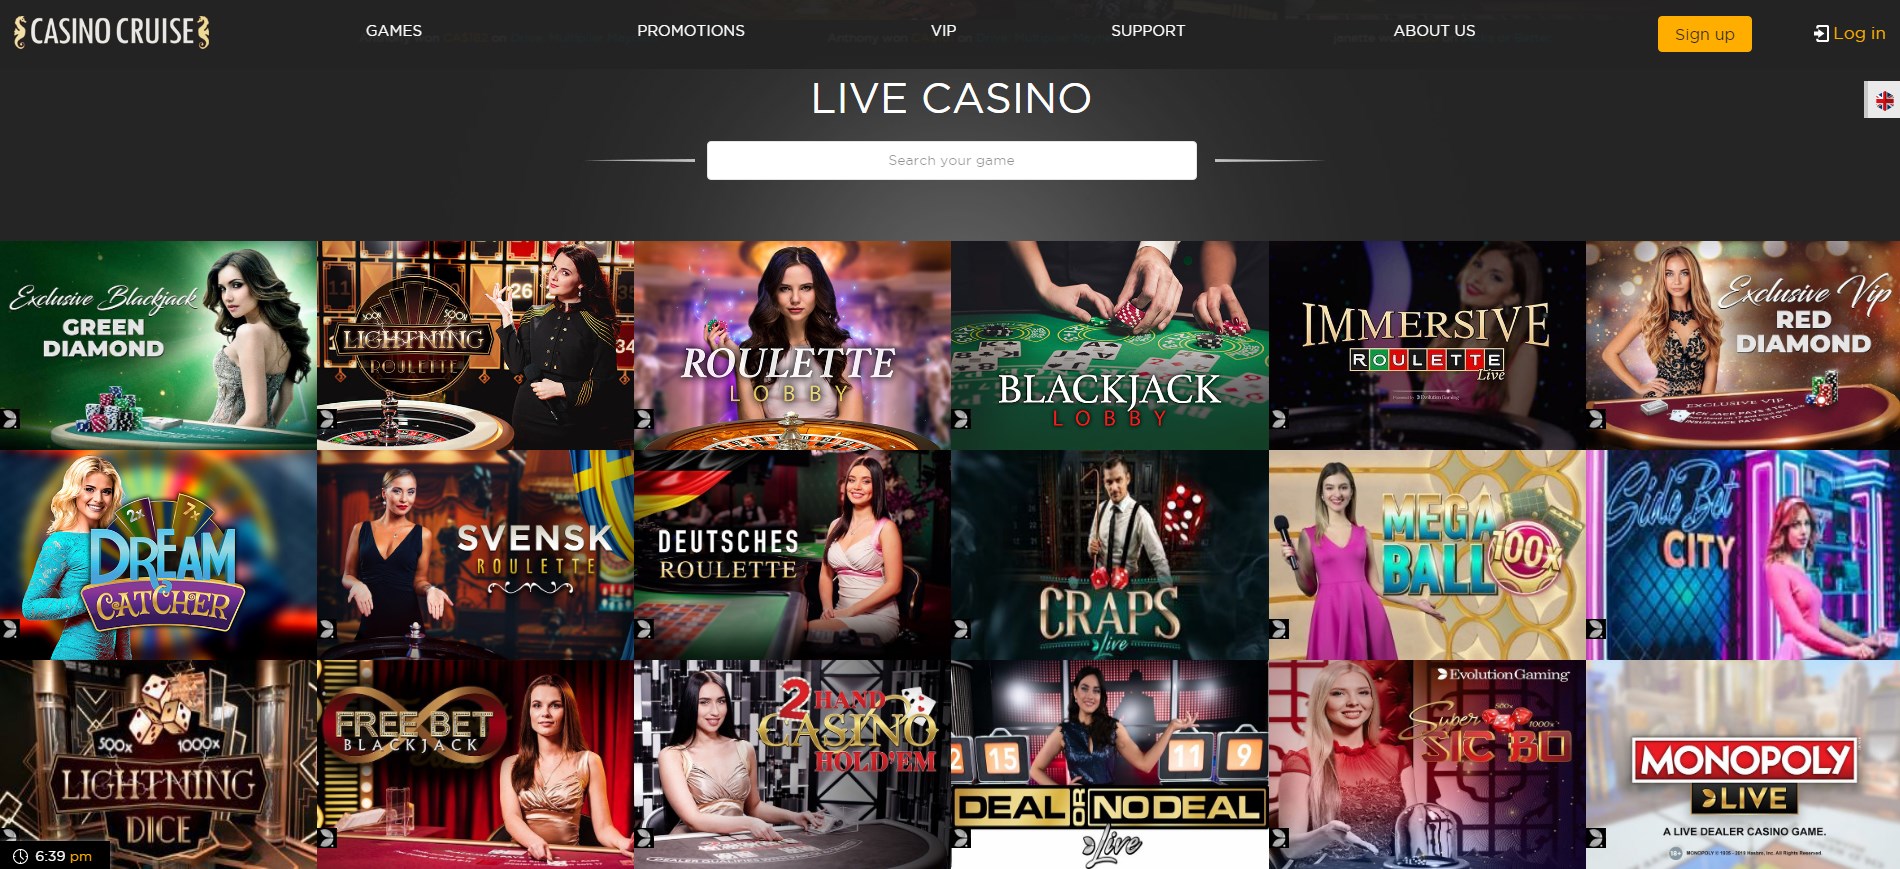 Casino Cruise Live Dealer Games